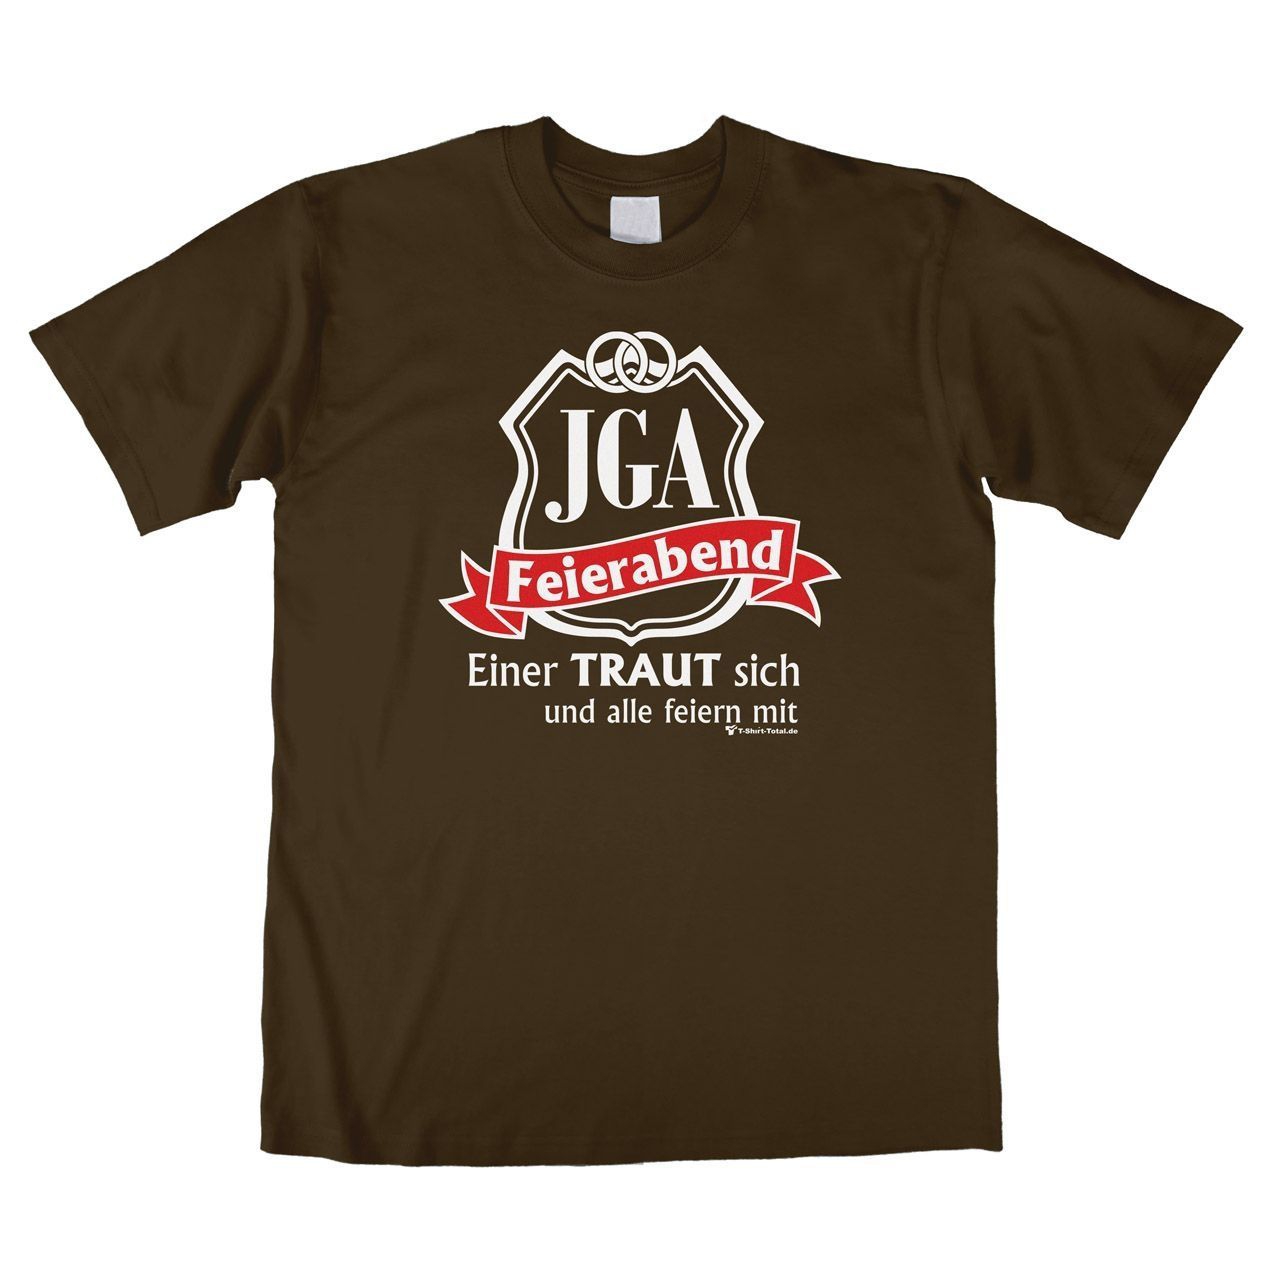 JGA Feierabend Unisex T-Shirt braun Medium